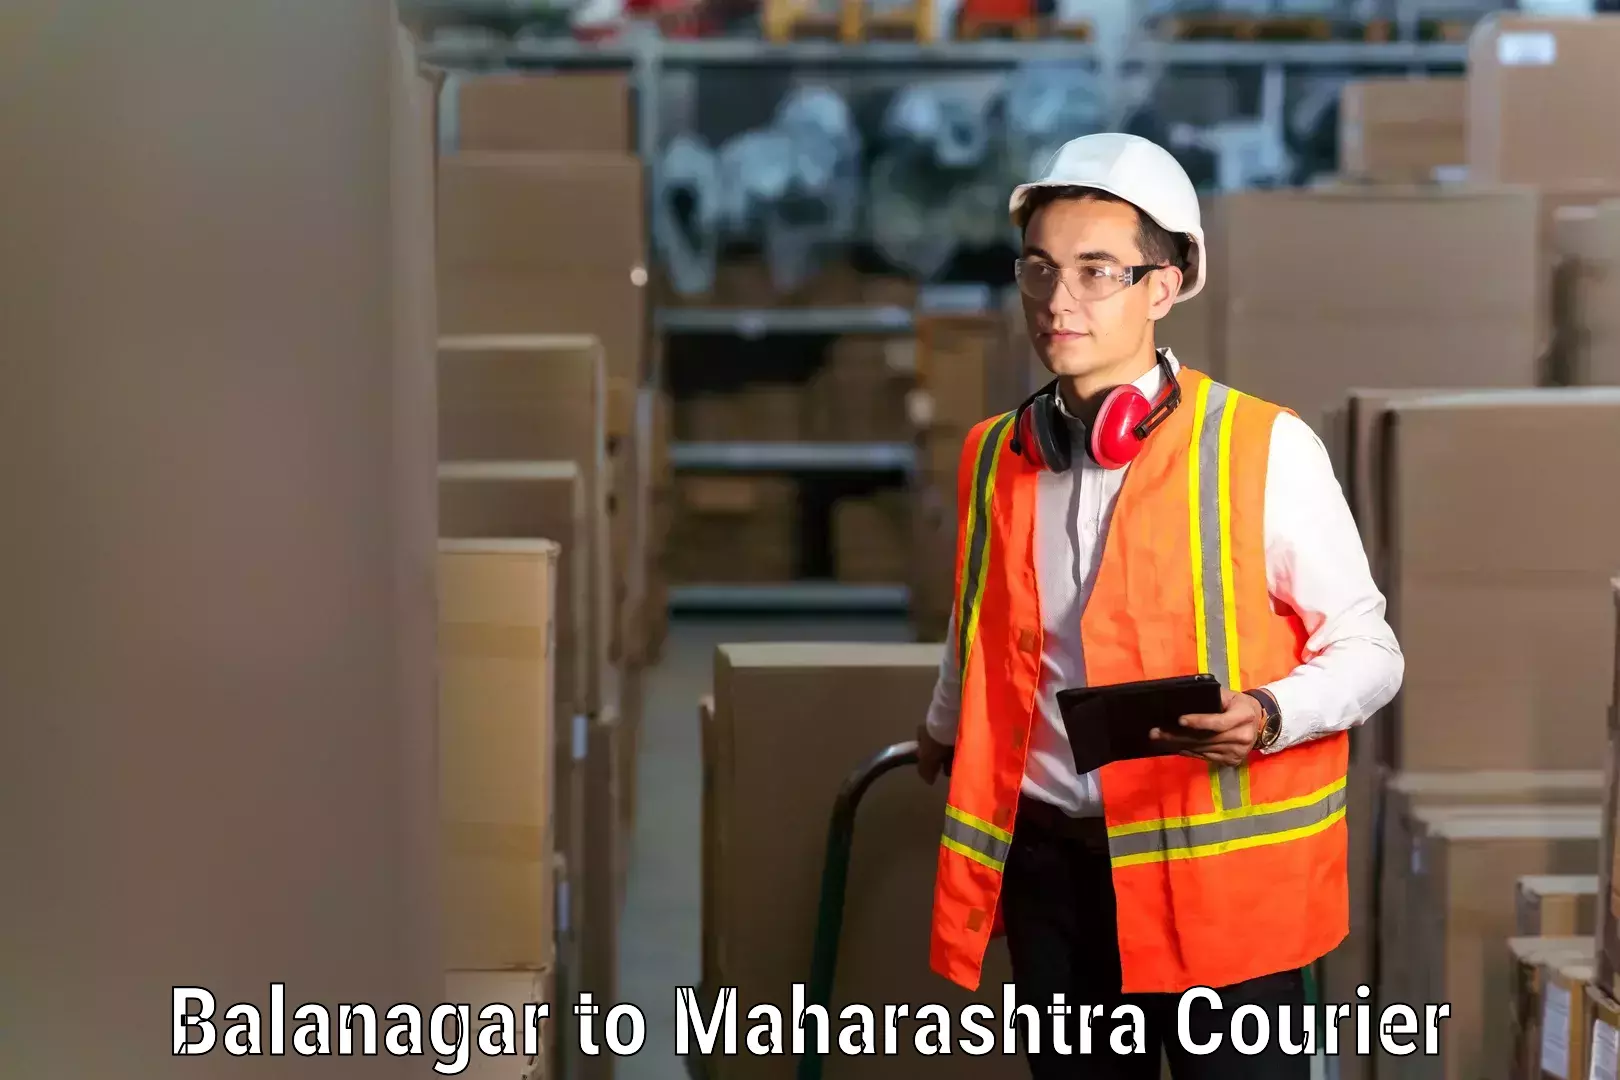 Moving service excellence Balanagar to Maharashtra